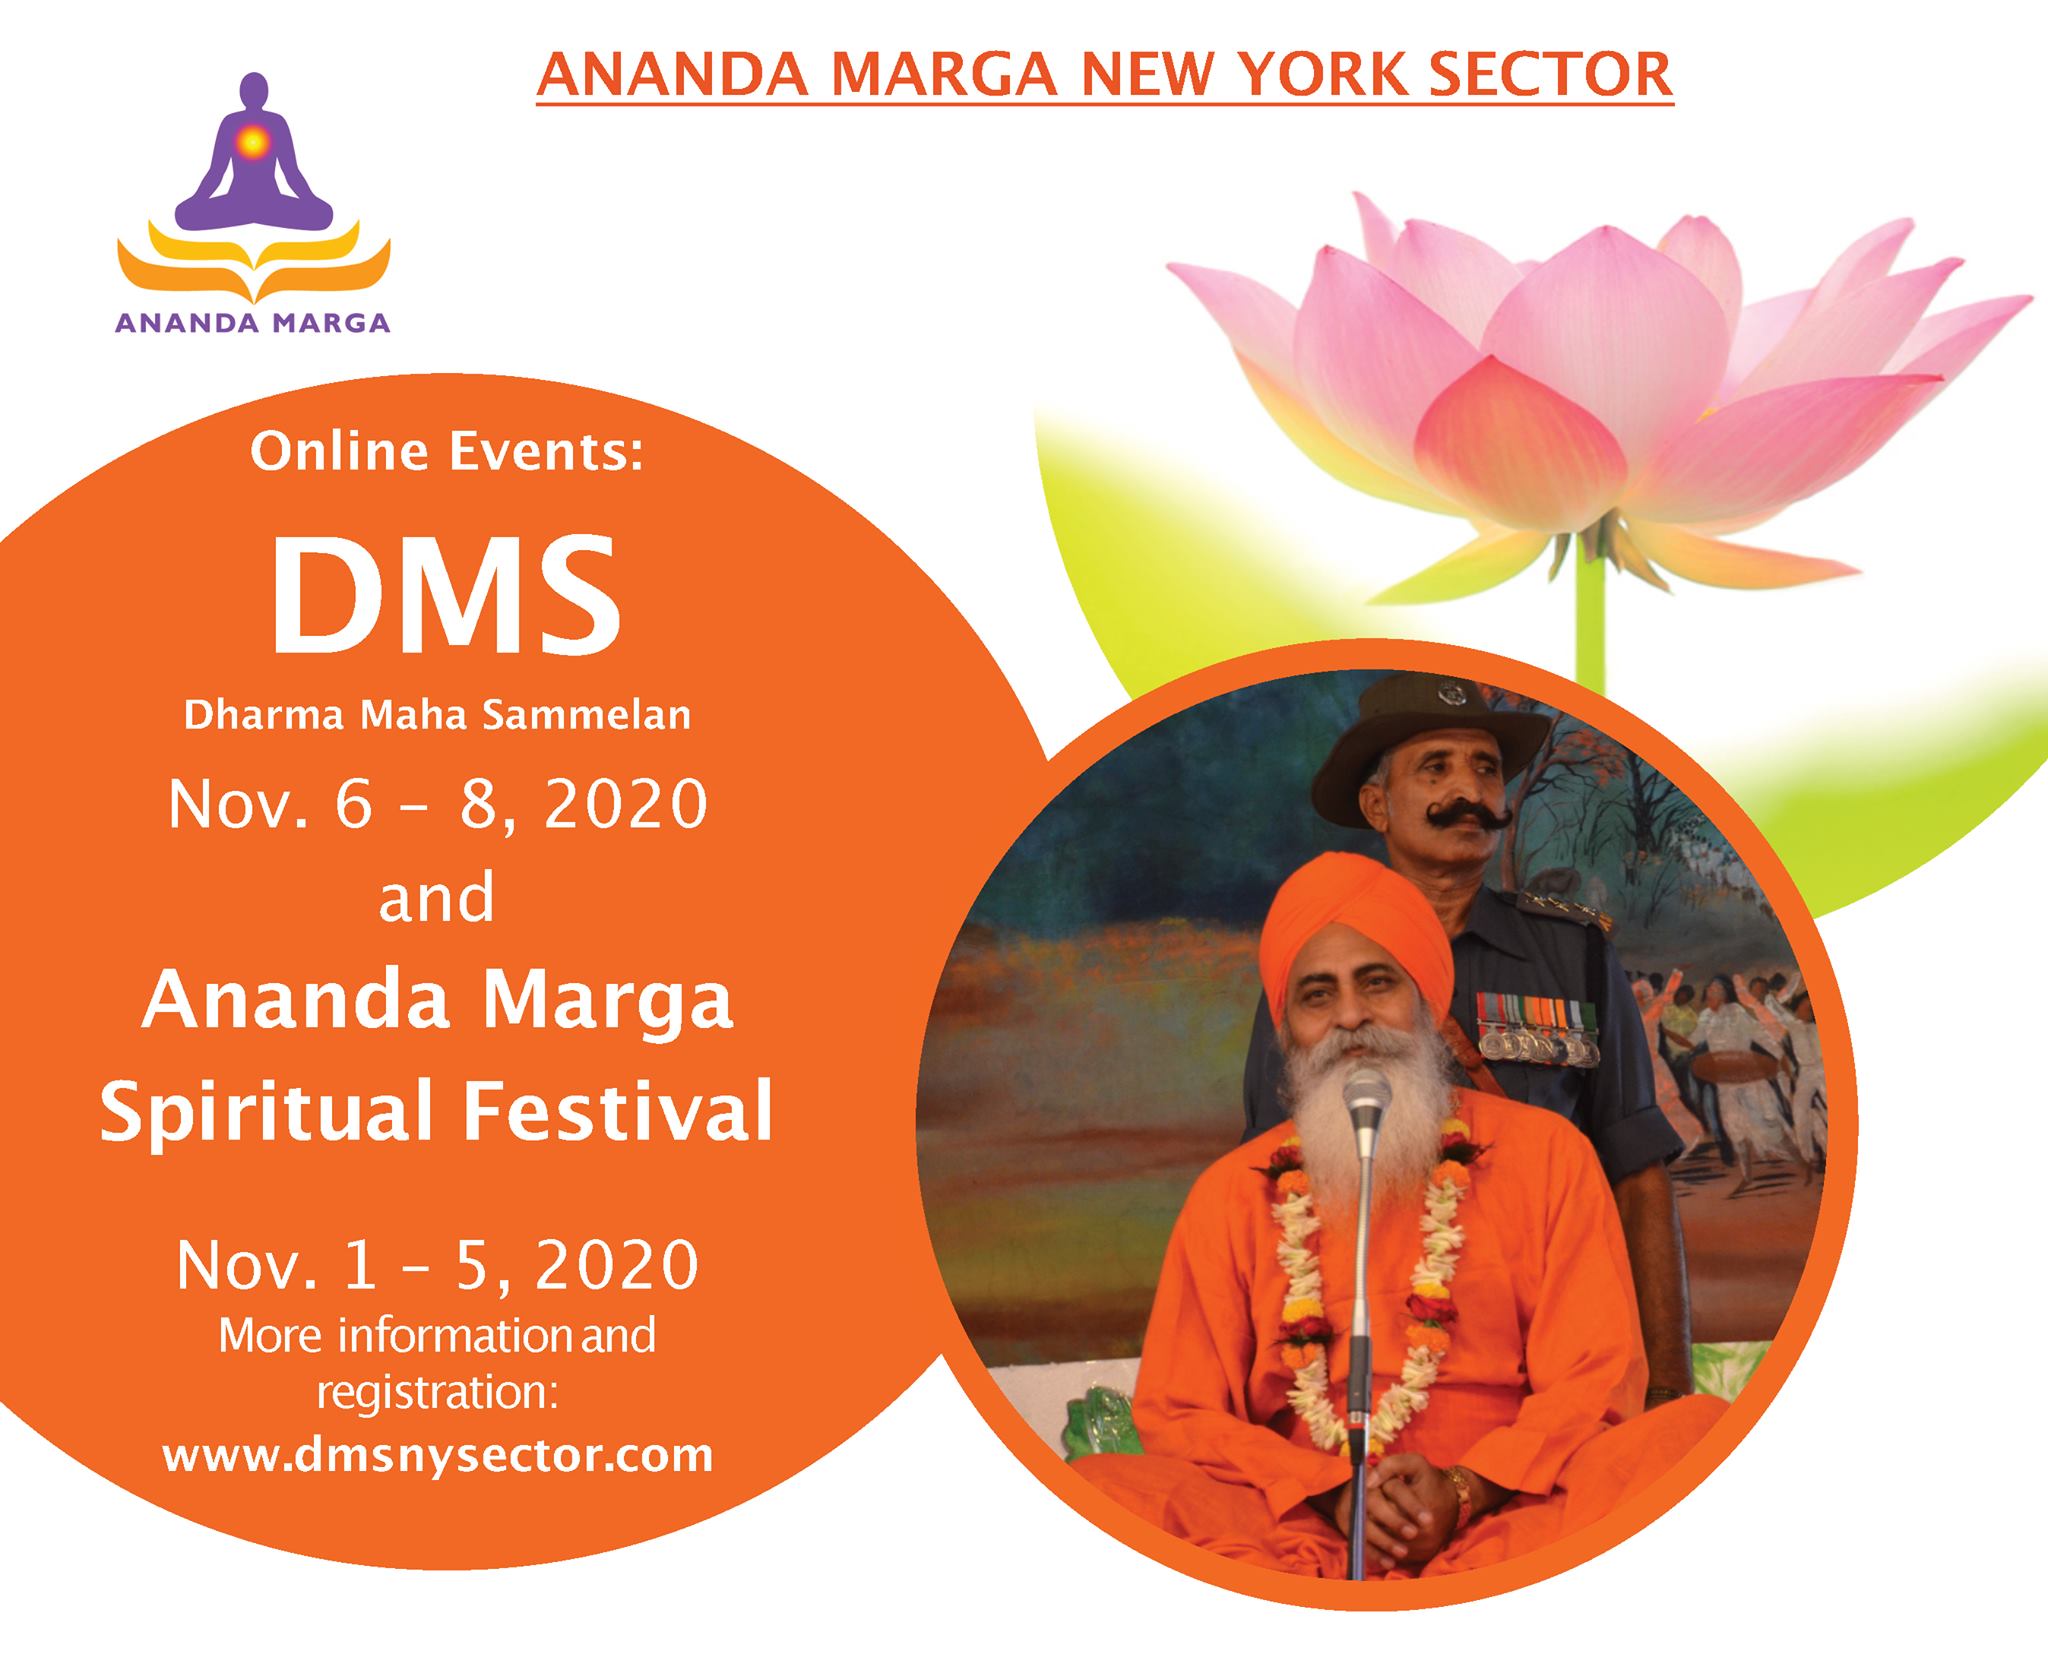 Ananda Marga Yoga and Meditation Center